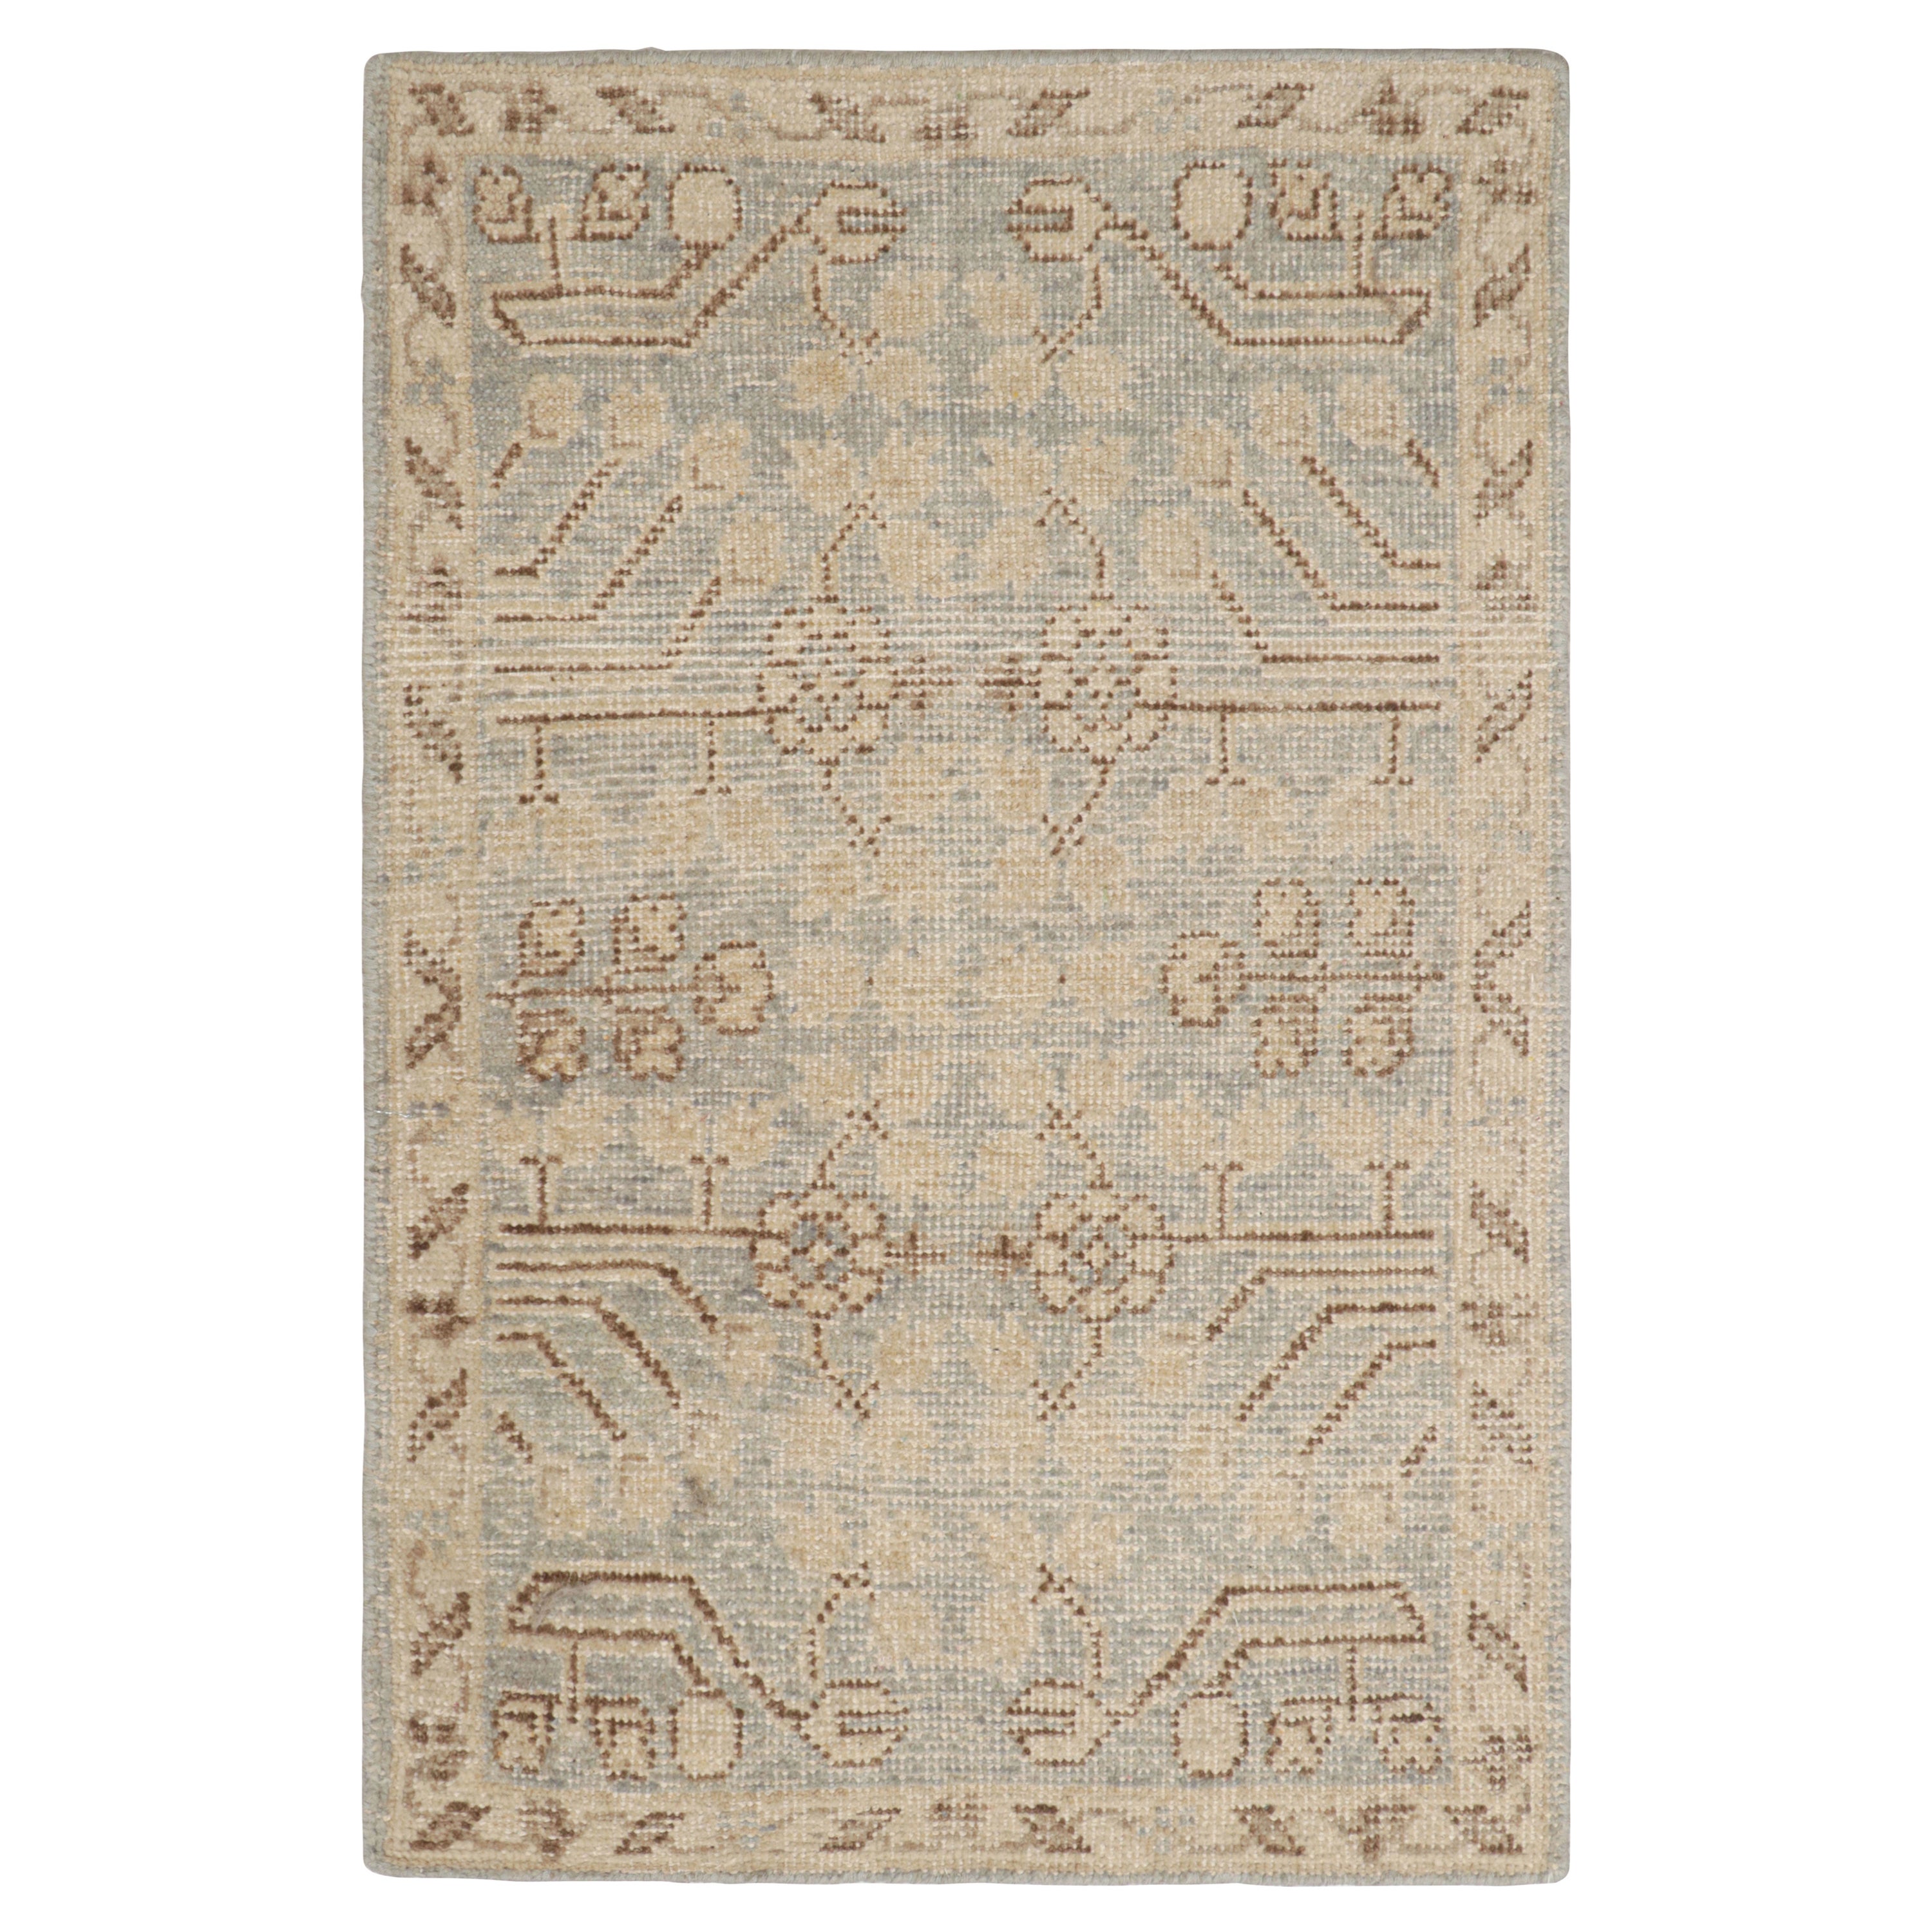 Rug & Kilim's Khotan Samarkand Style Scatter Rug with Geometric Patterns (tapis à motifs géométriques)